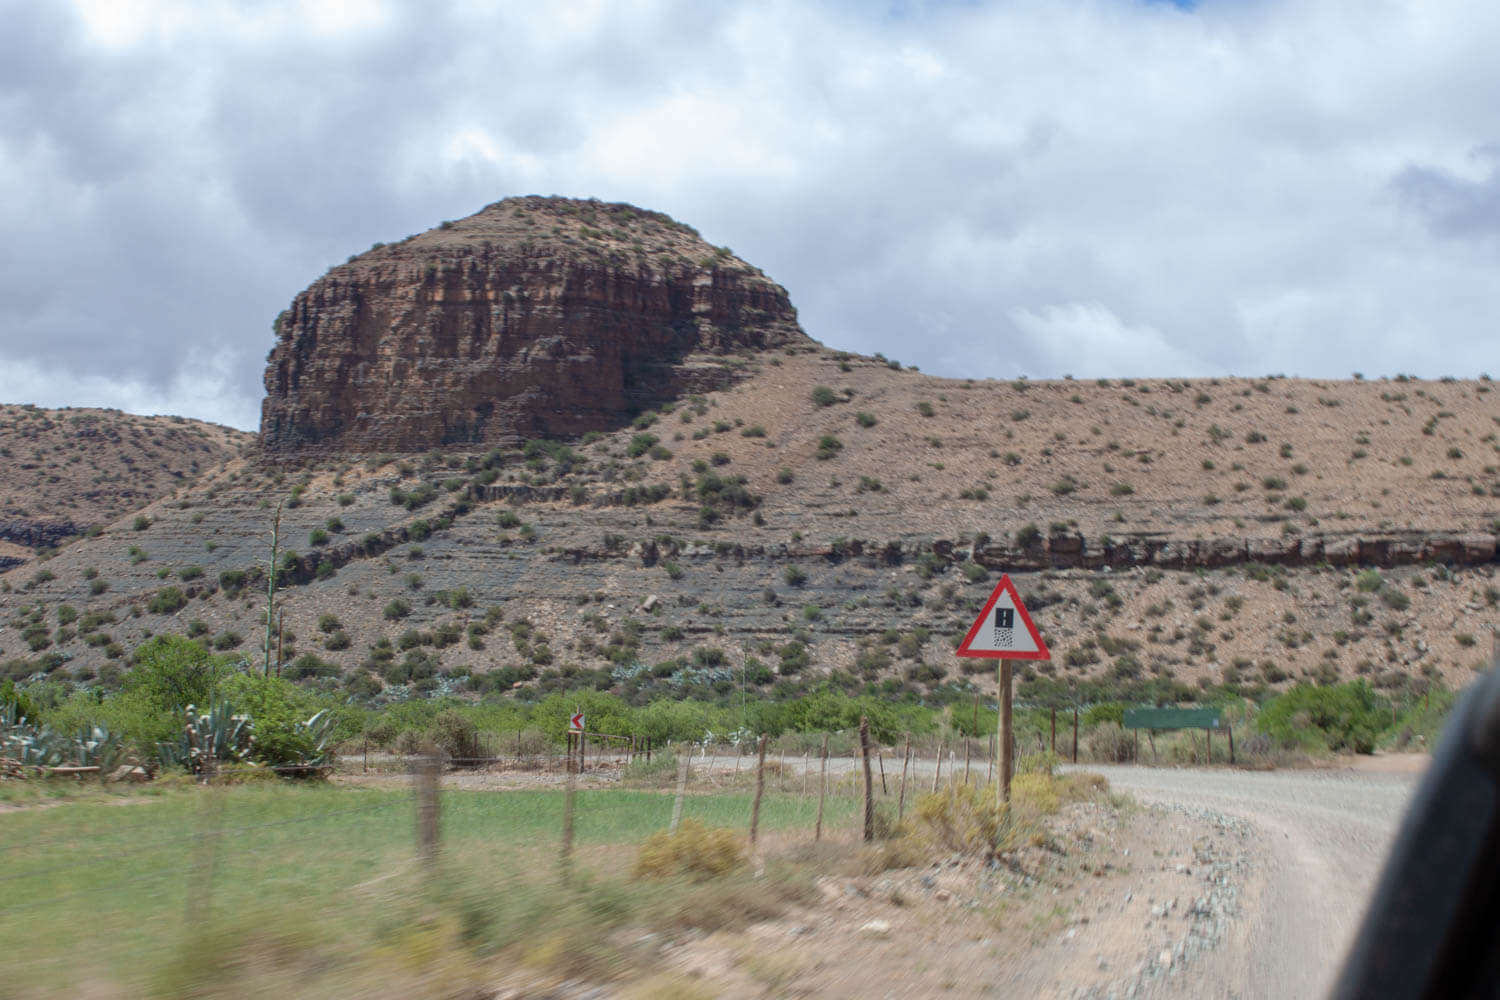 Karoo desert and sign warning of winding roads